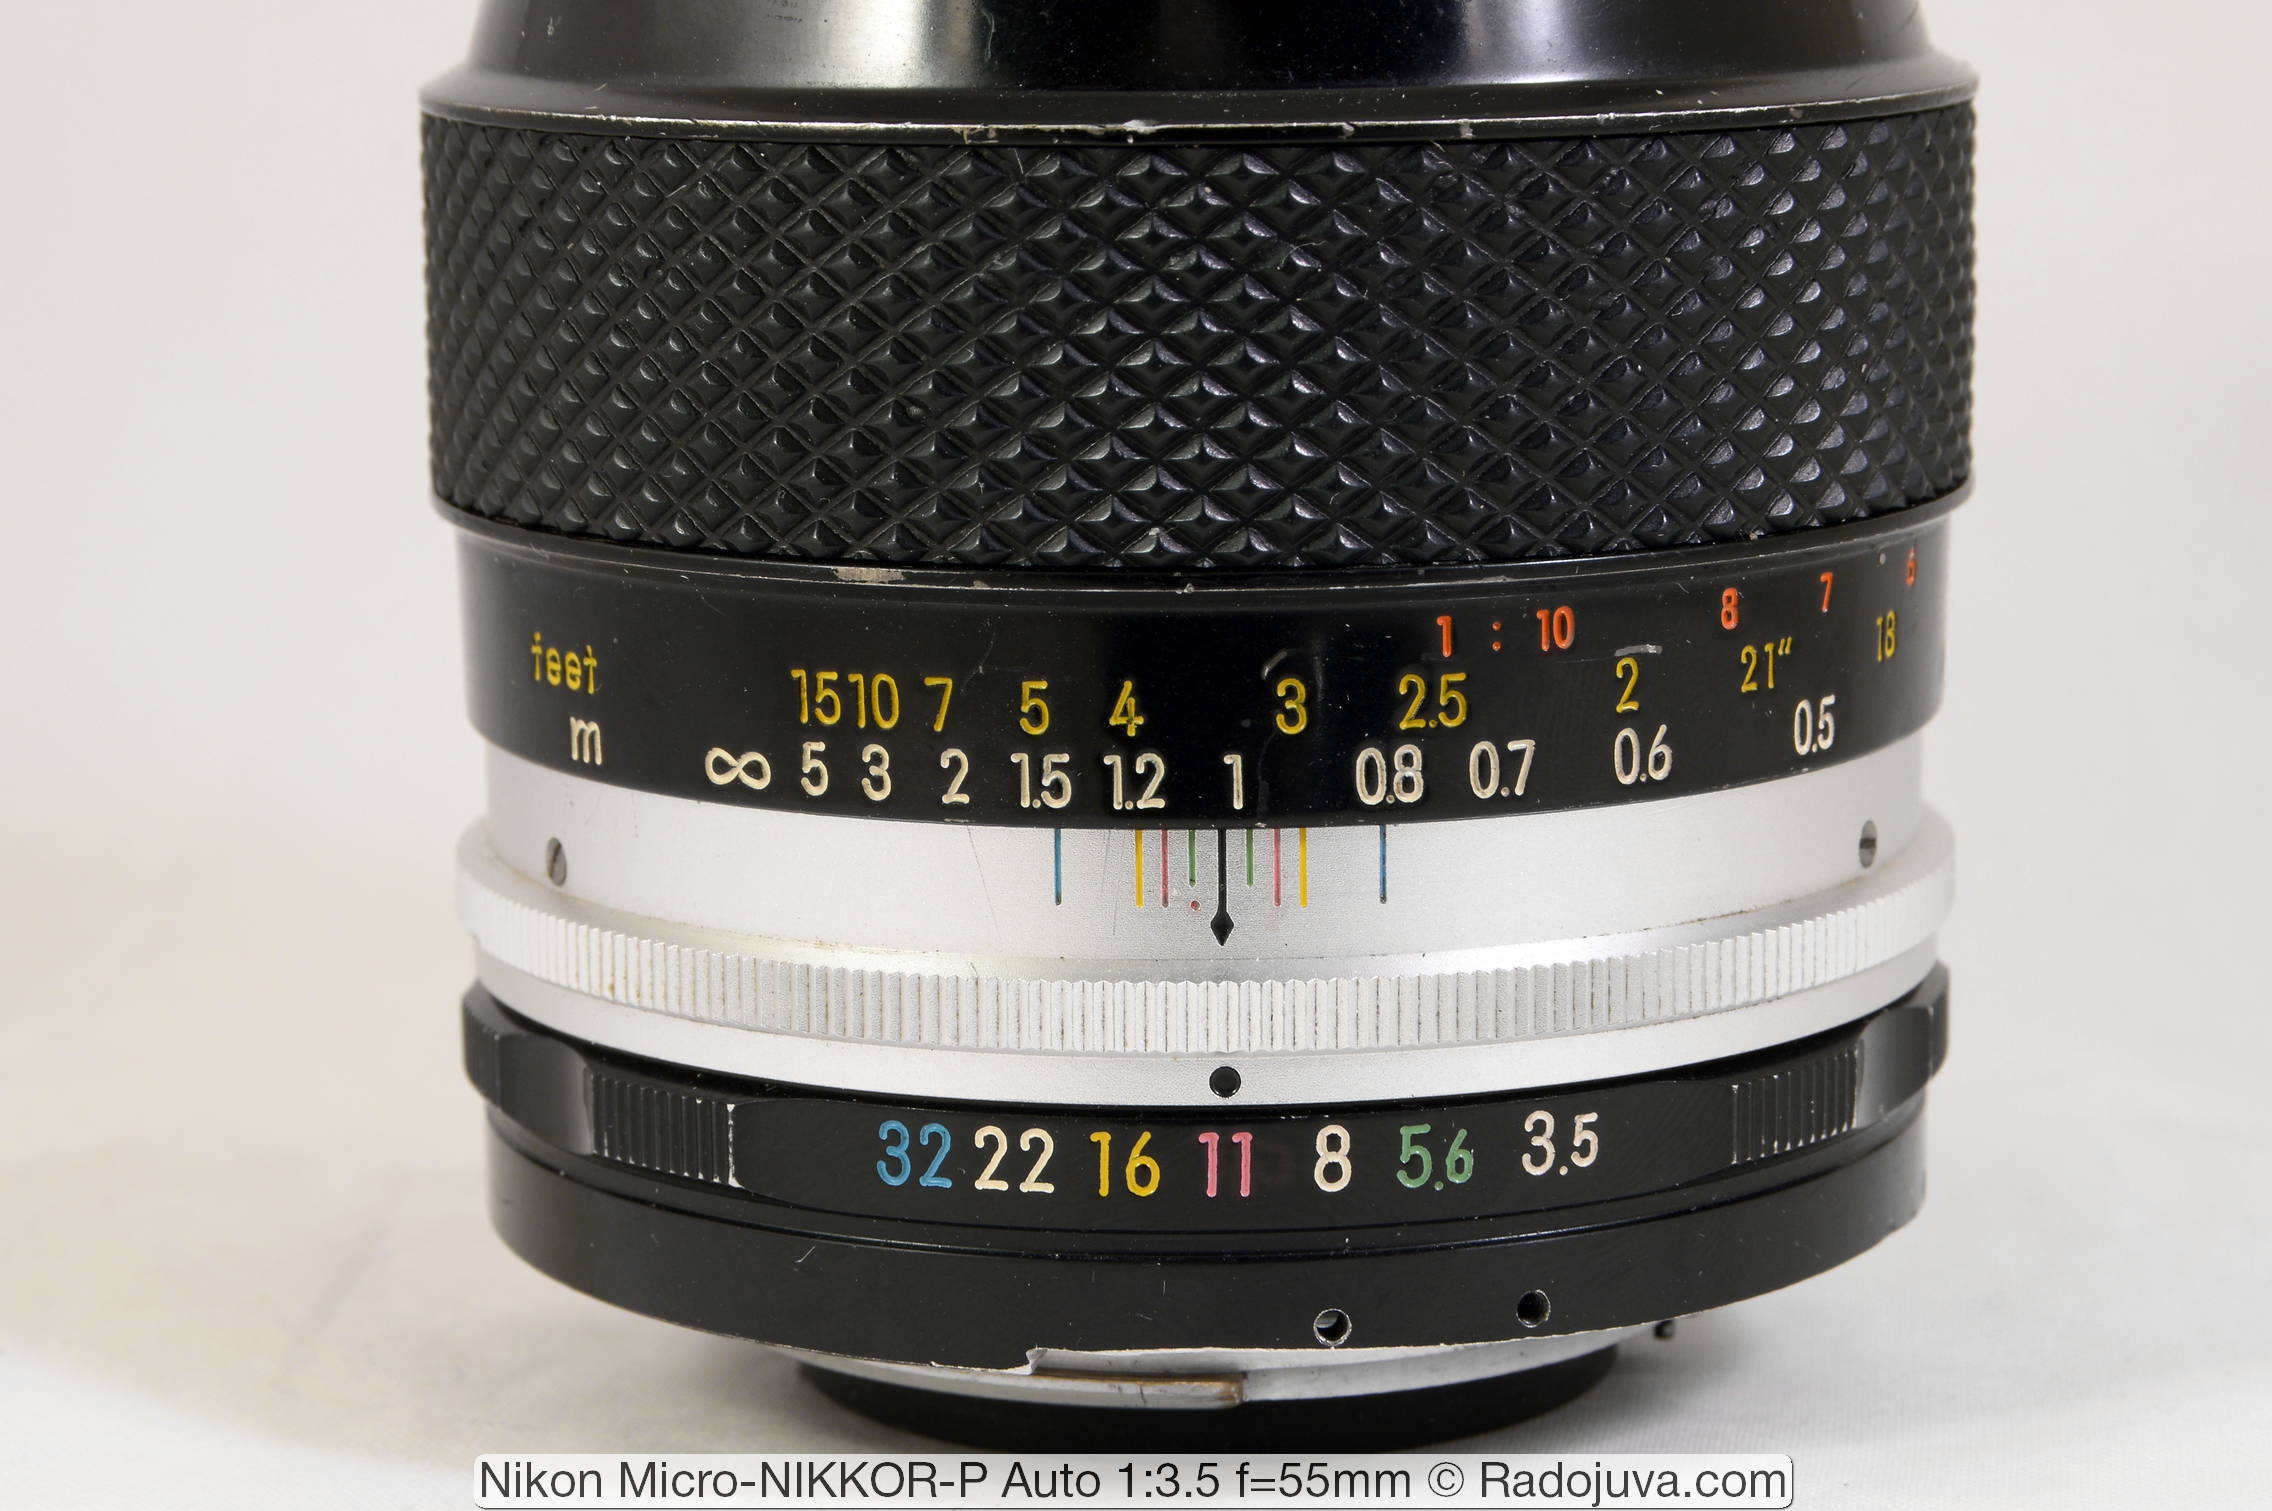 Nikon Micro-NIKKOR-P Auto 1: 3.5 f = 55mm